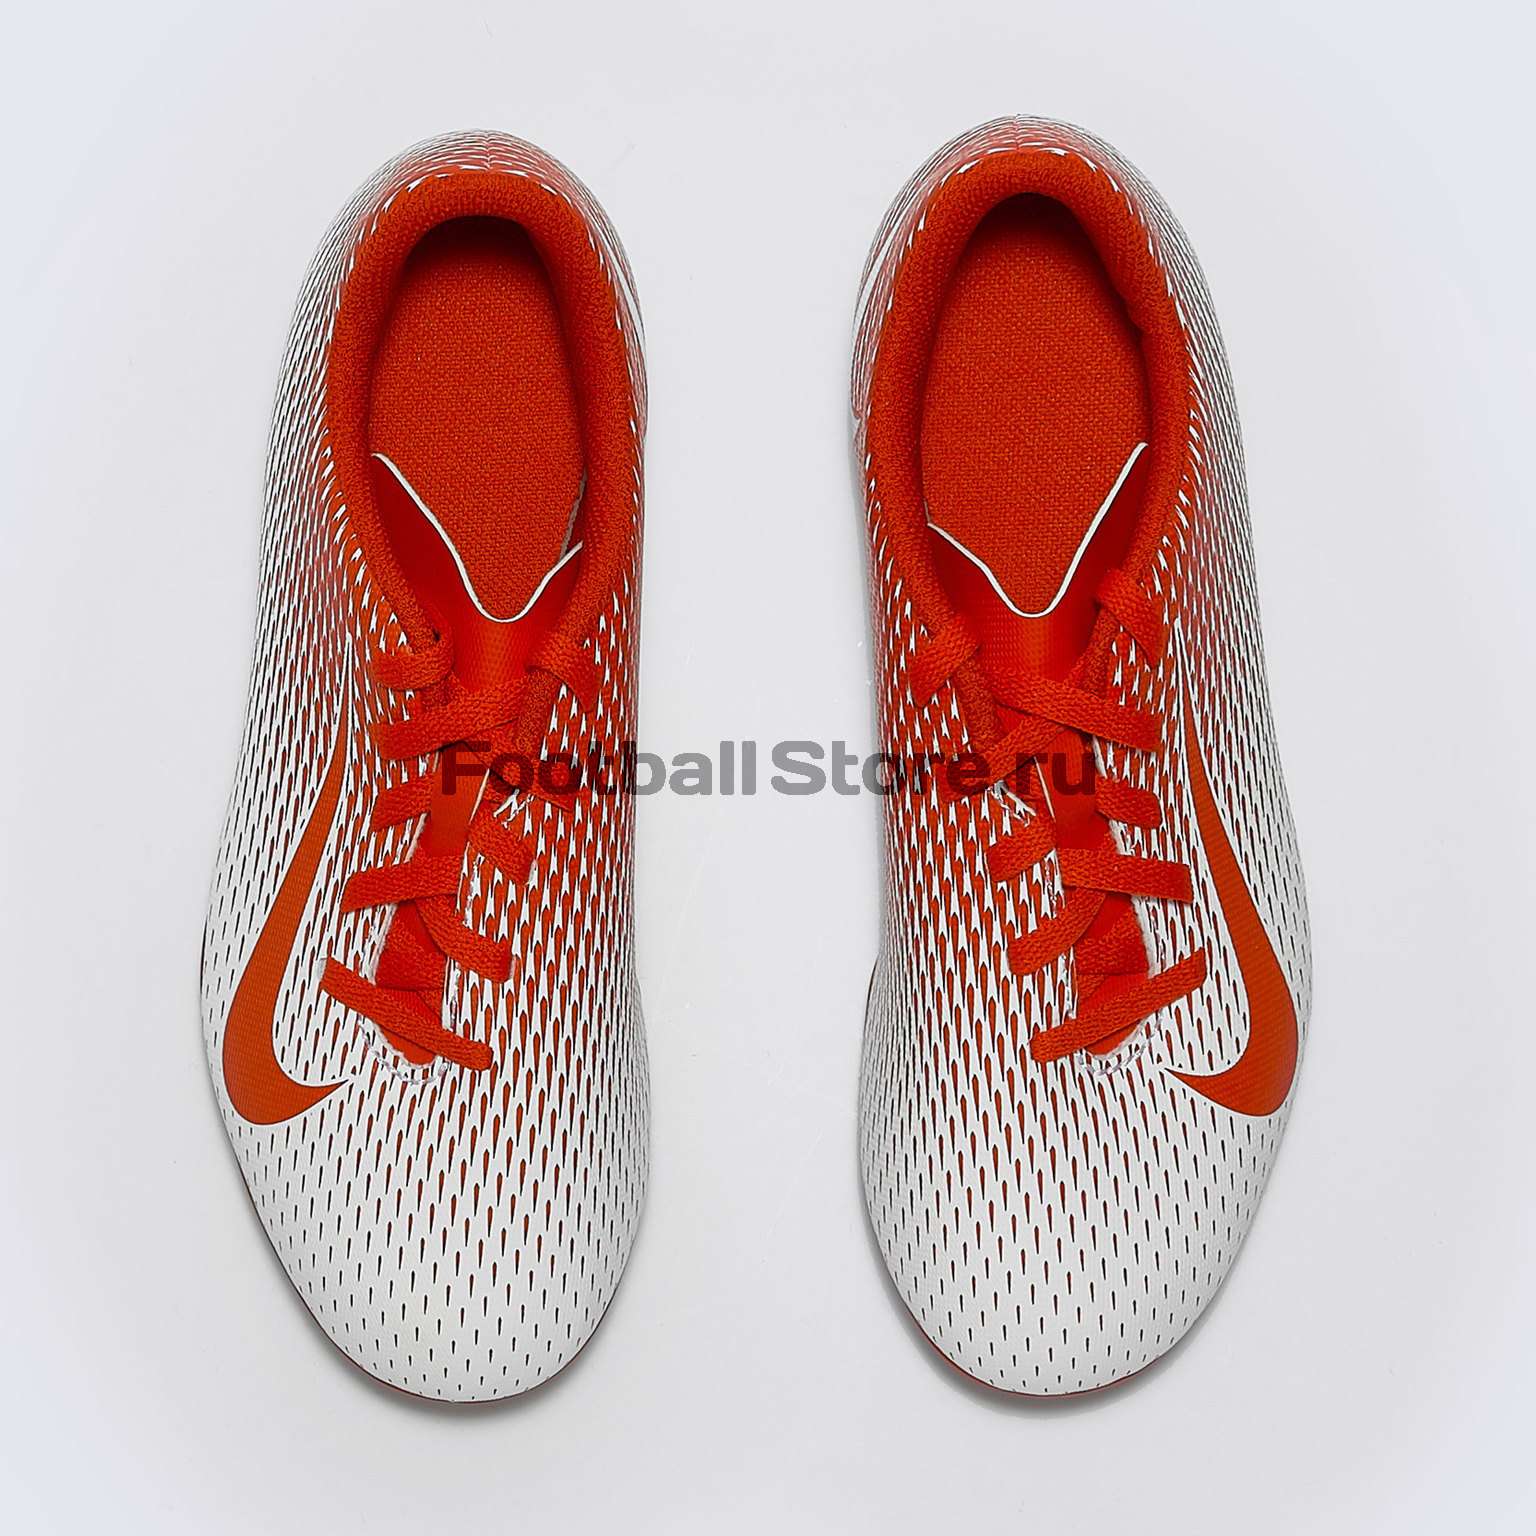 Бутсы детские Nike Bravata II FG 844442-177